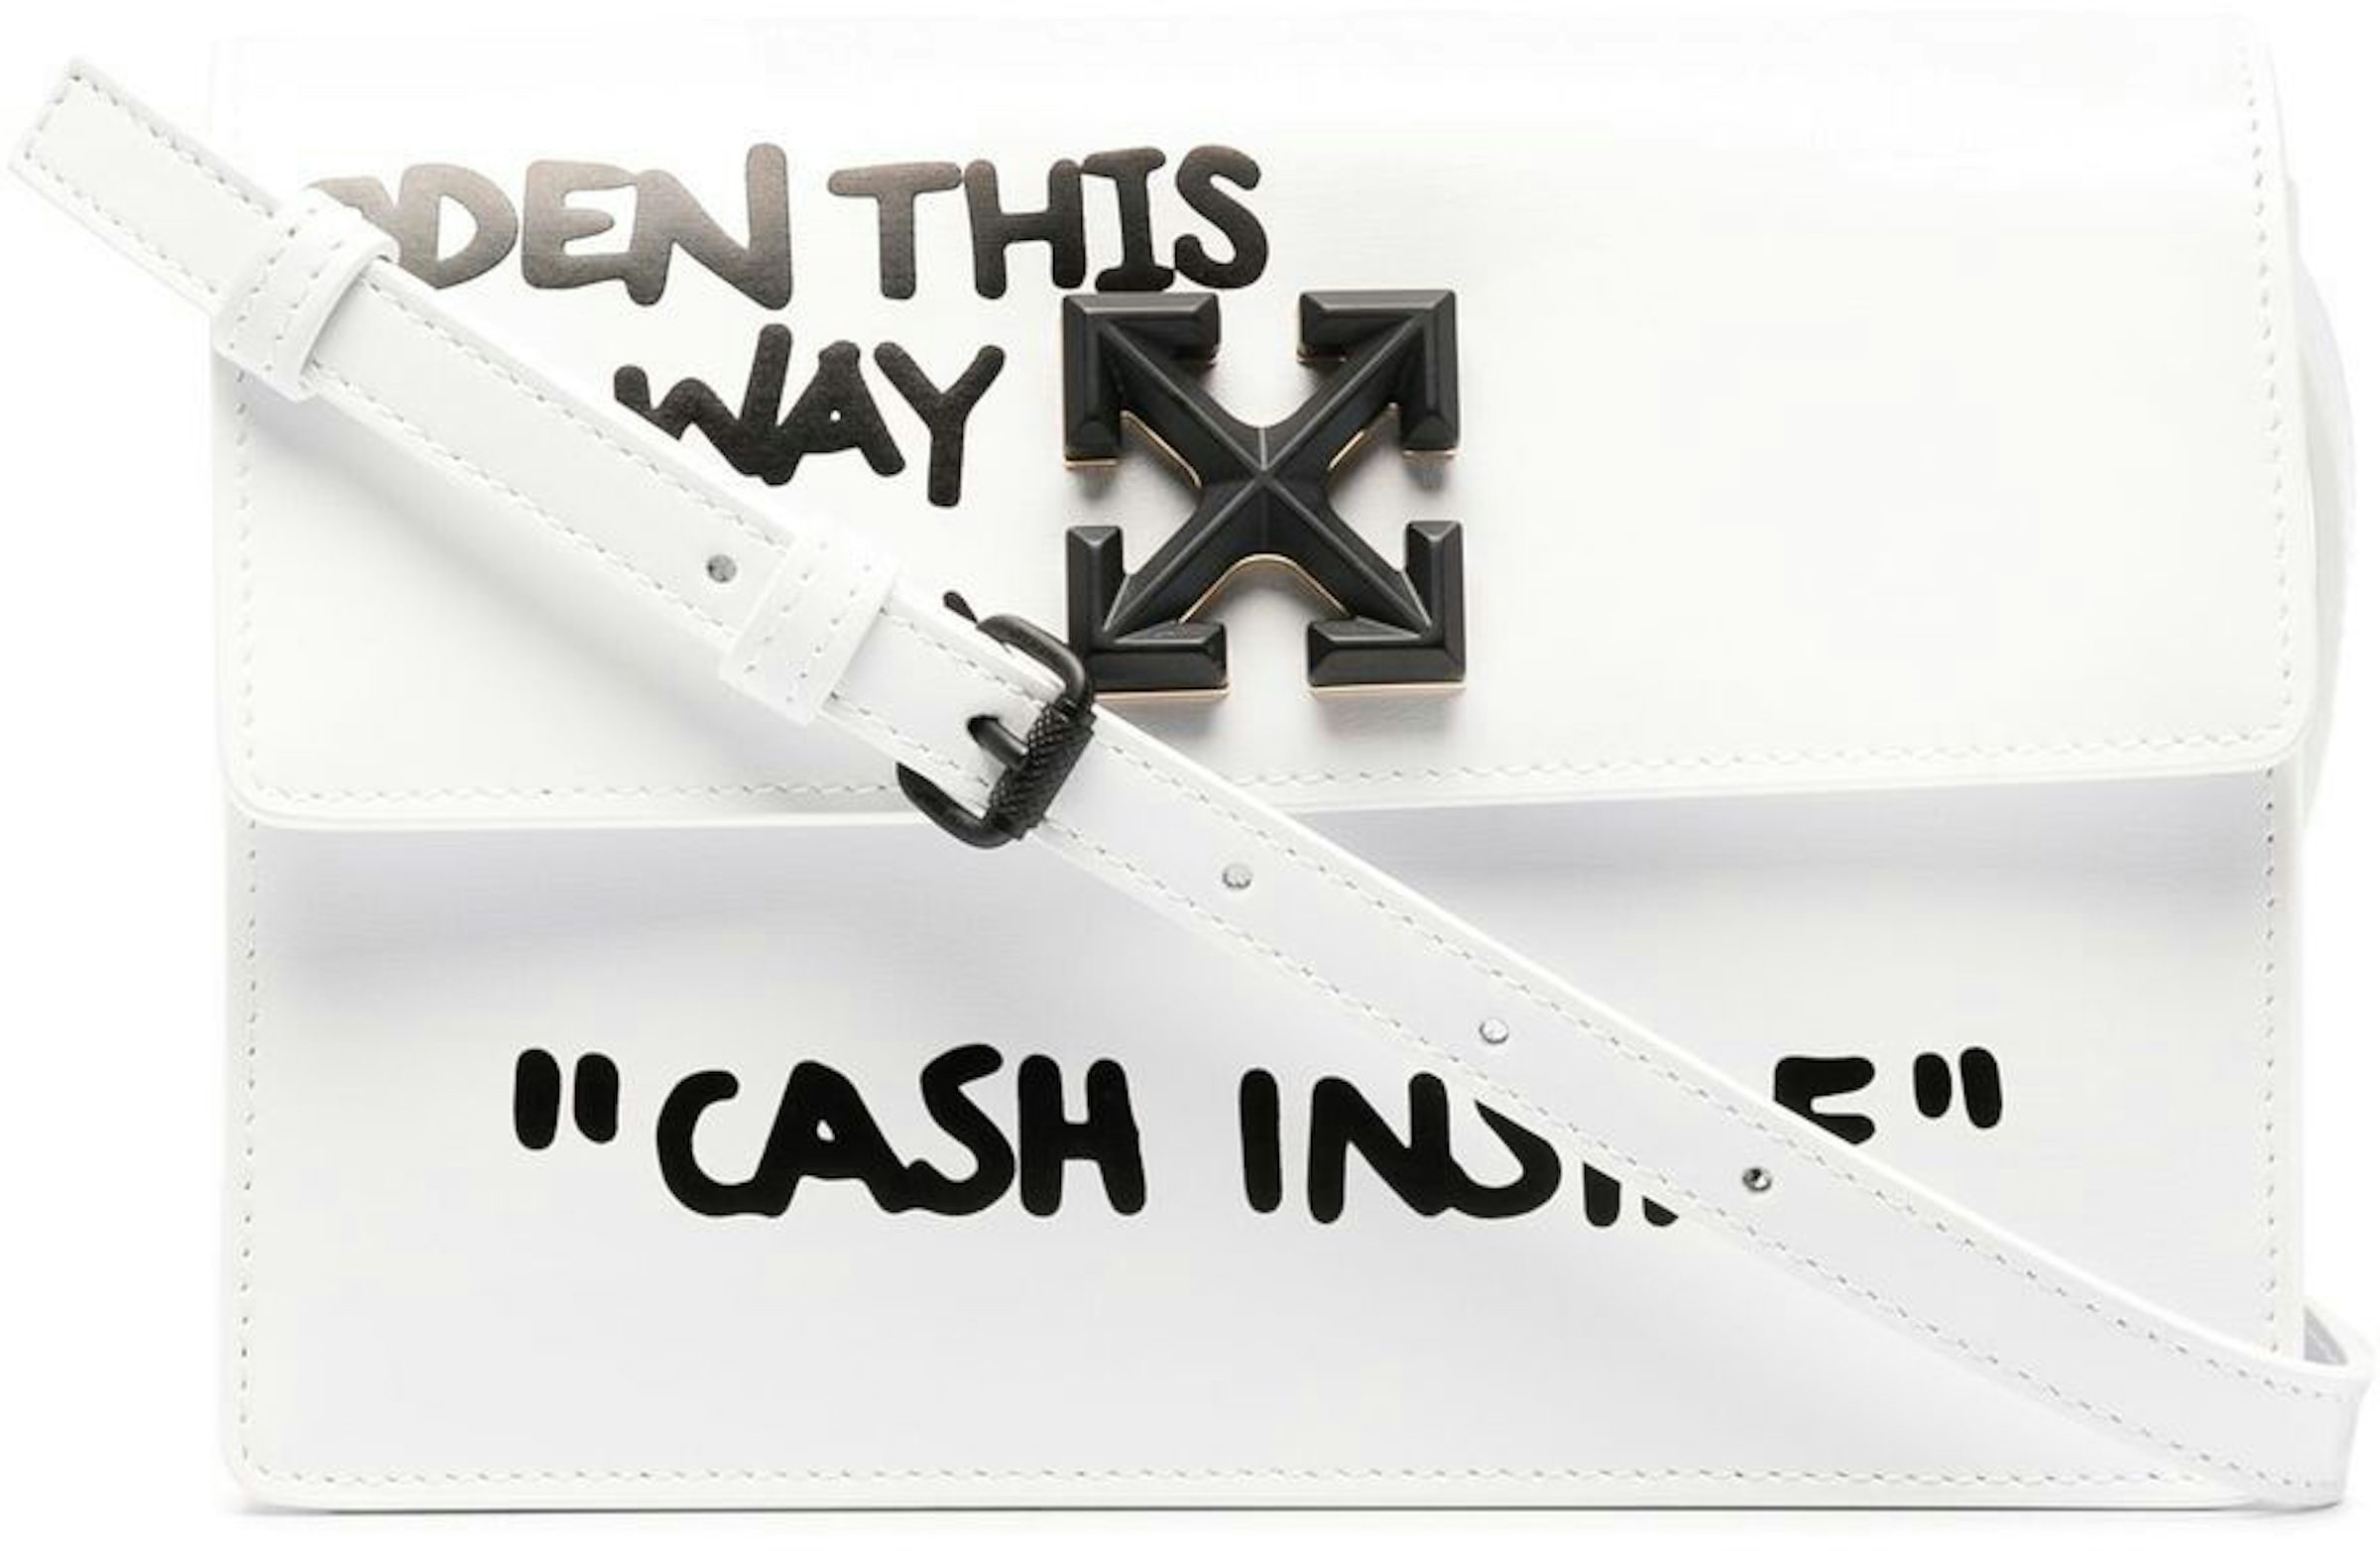 Off-White Leather Jitney 0.7 Cash Inside Crossbody Bag